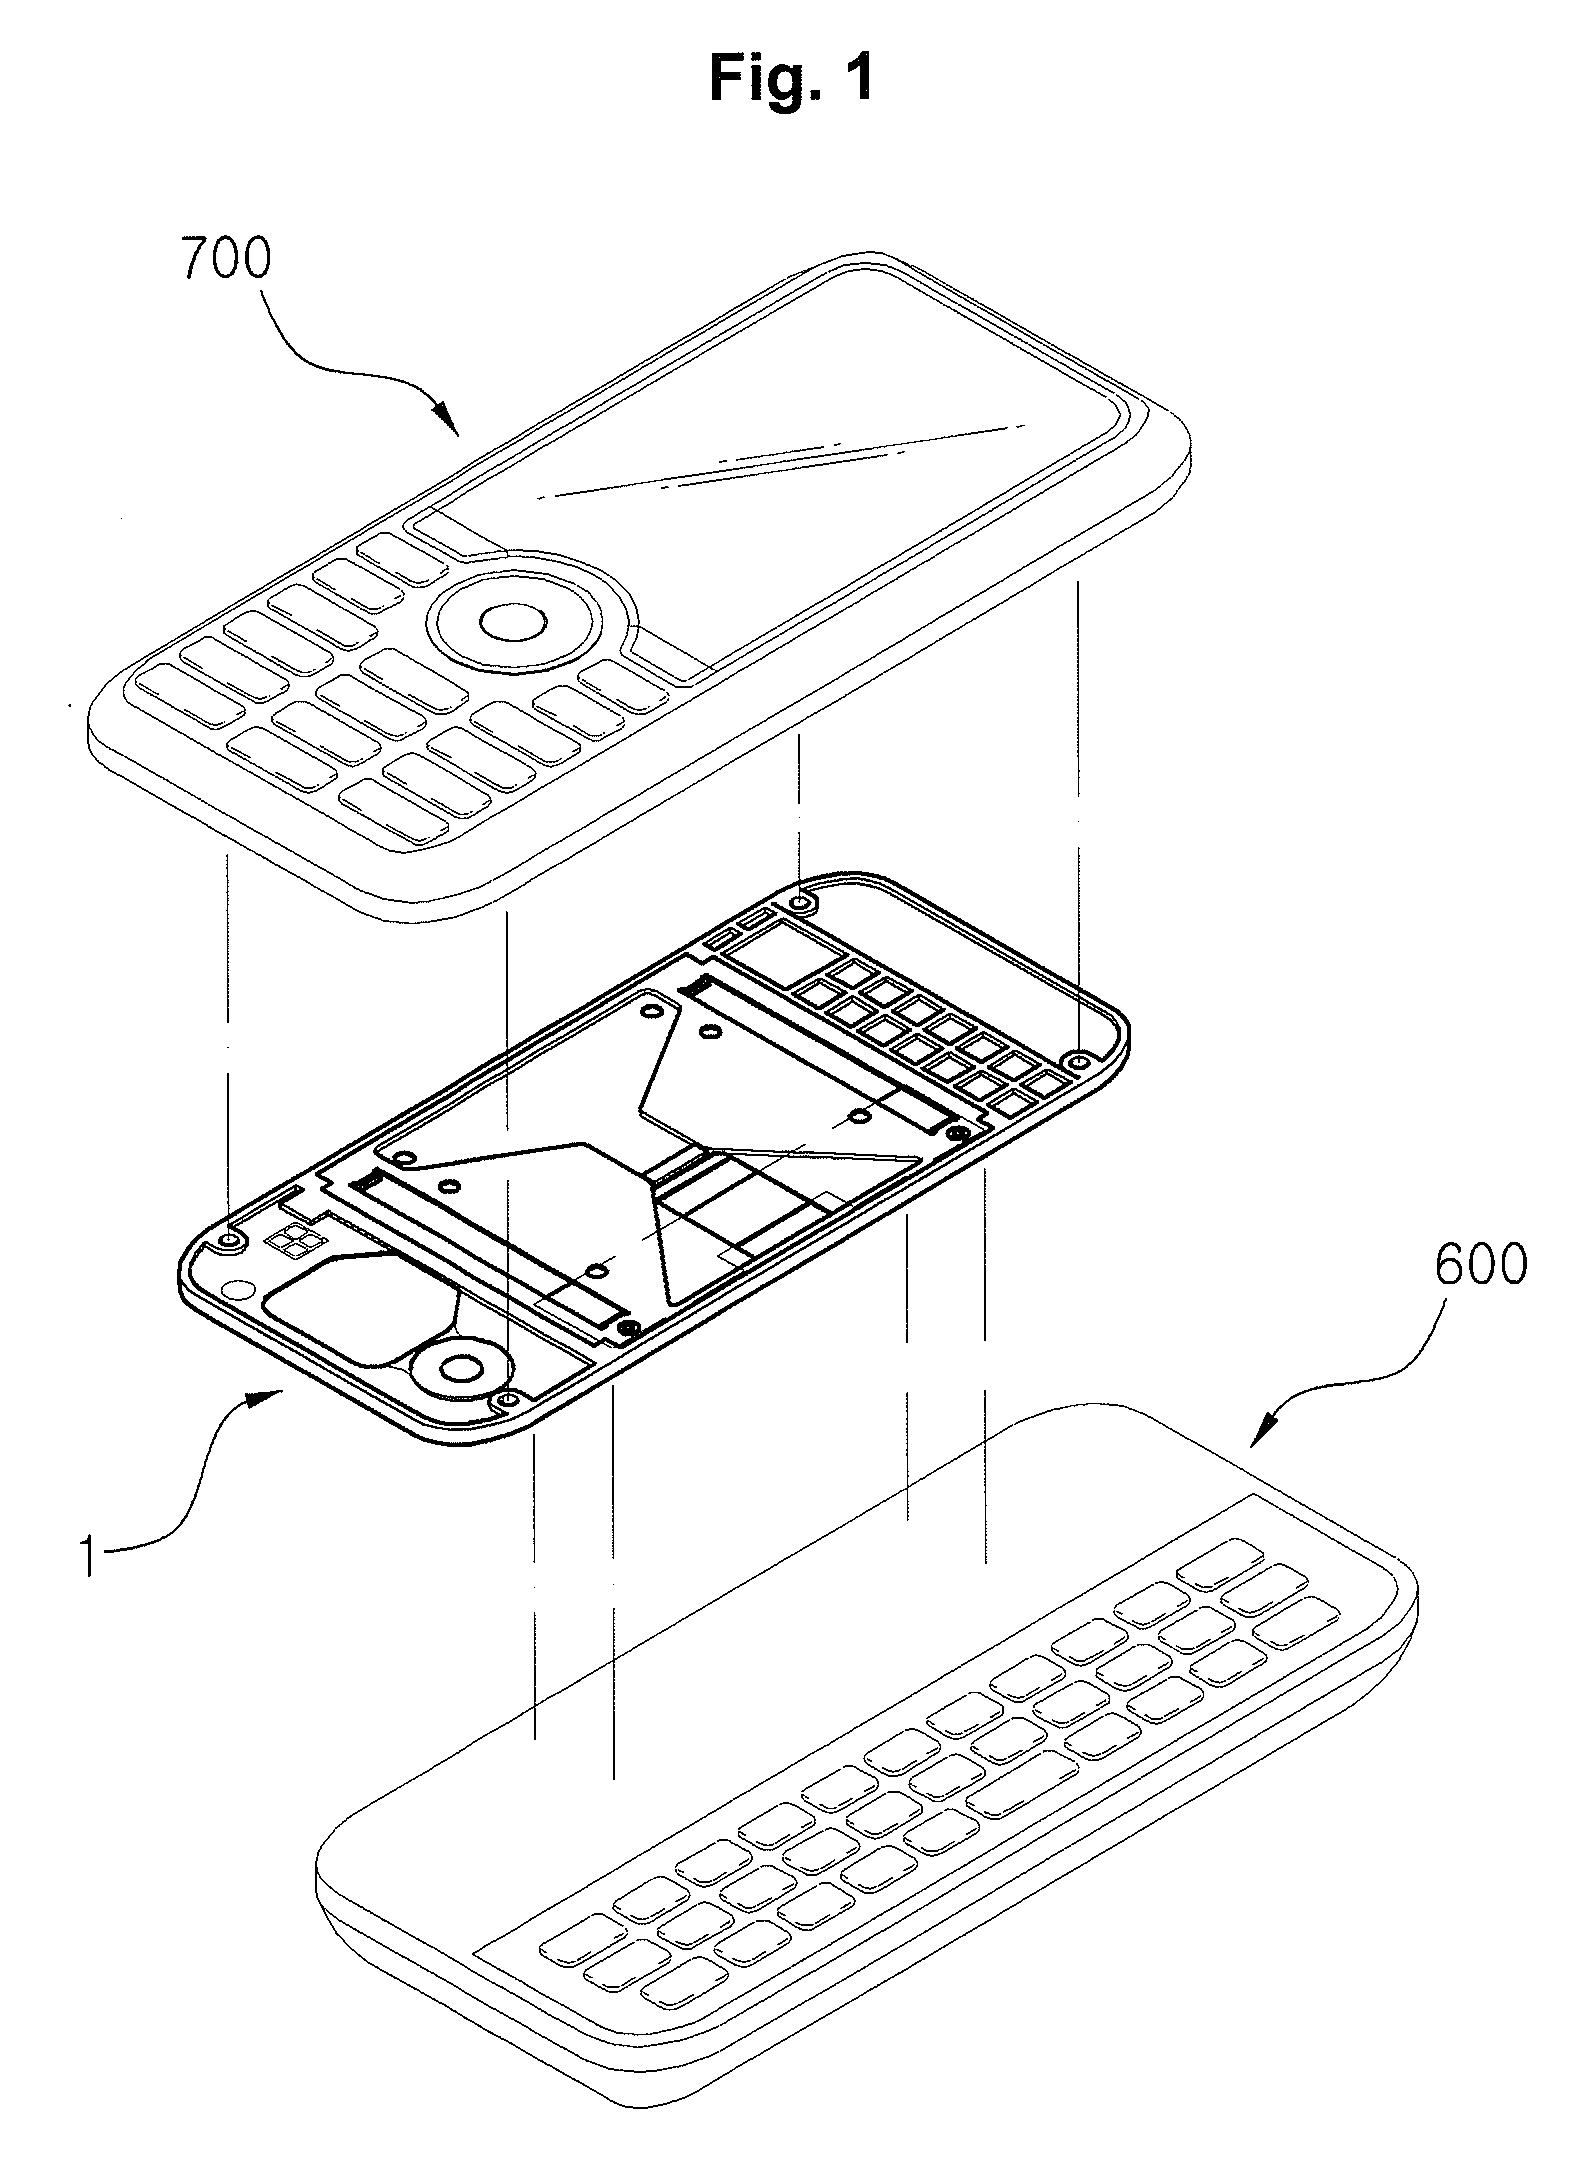 Slide hinge module for mobile phone with built-in keypad